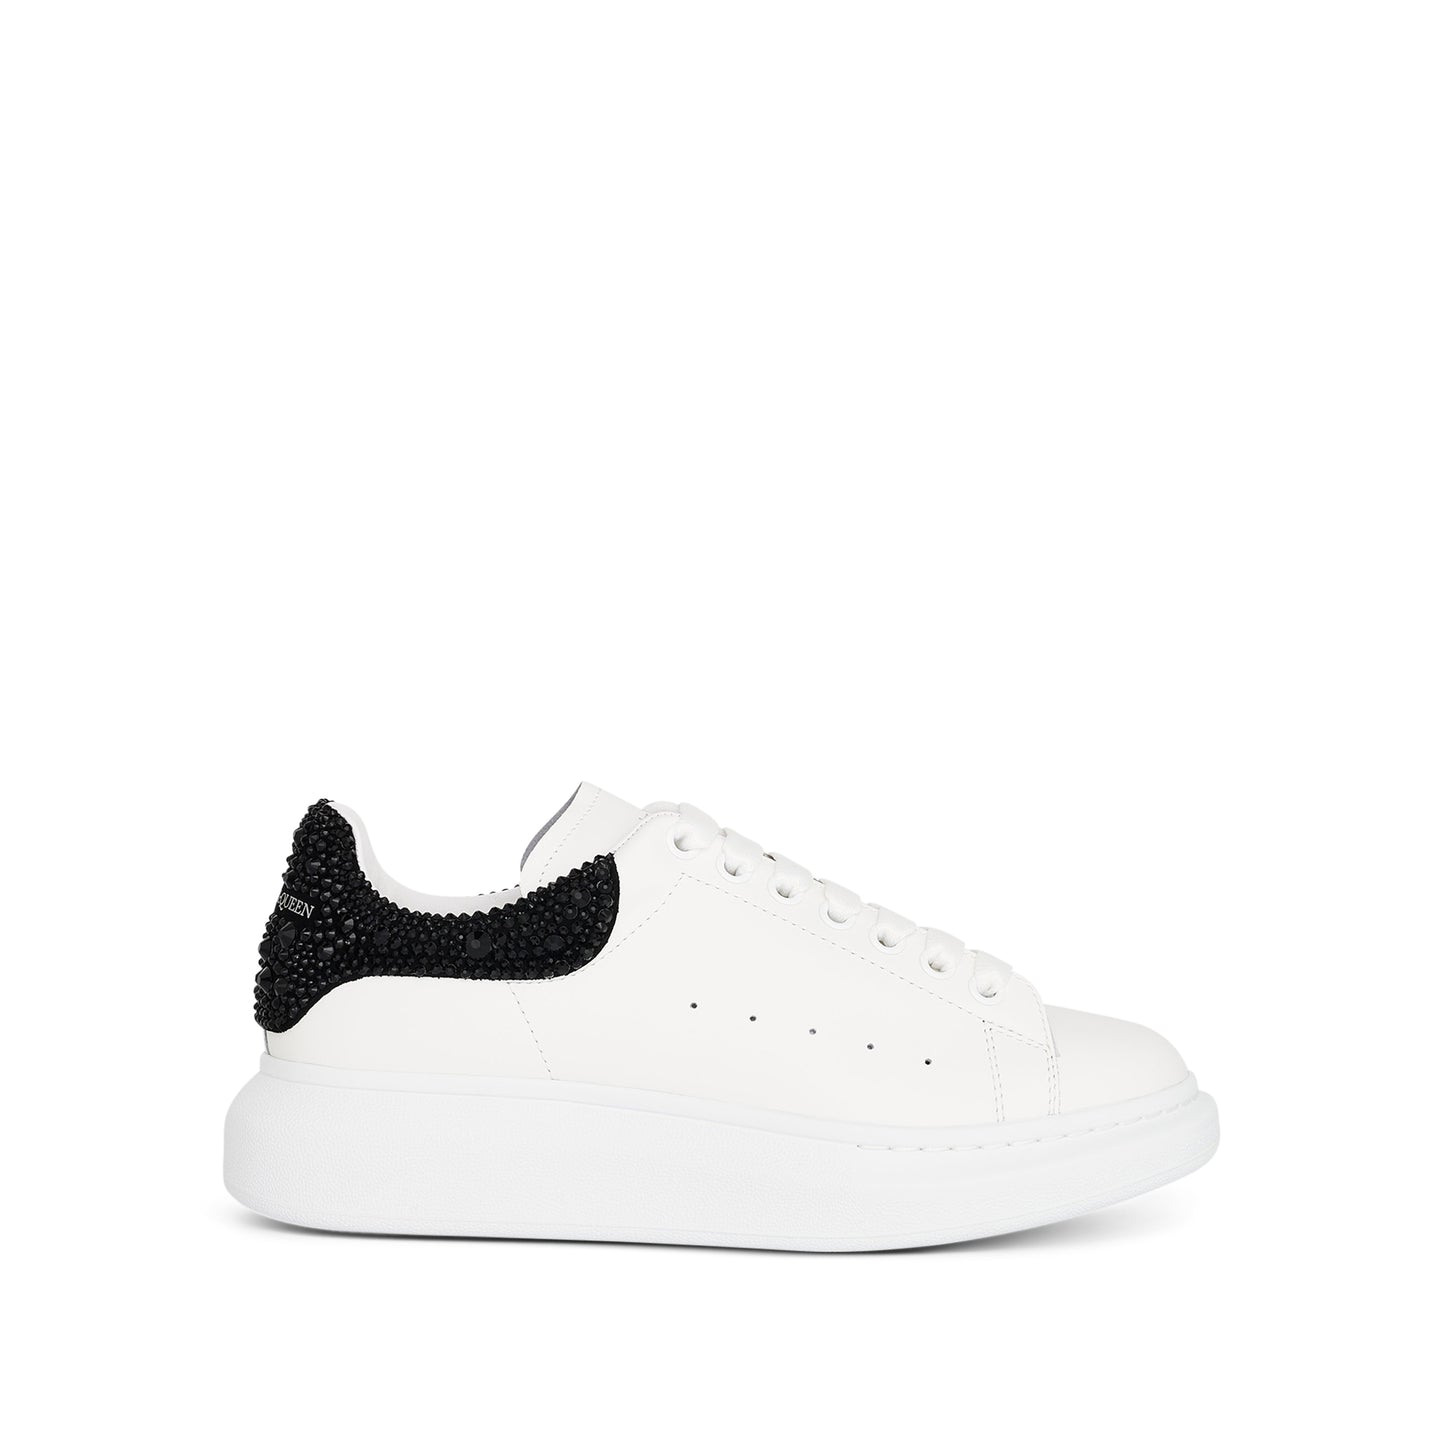 Larry Oversized Sneaker in White/Black/Jet